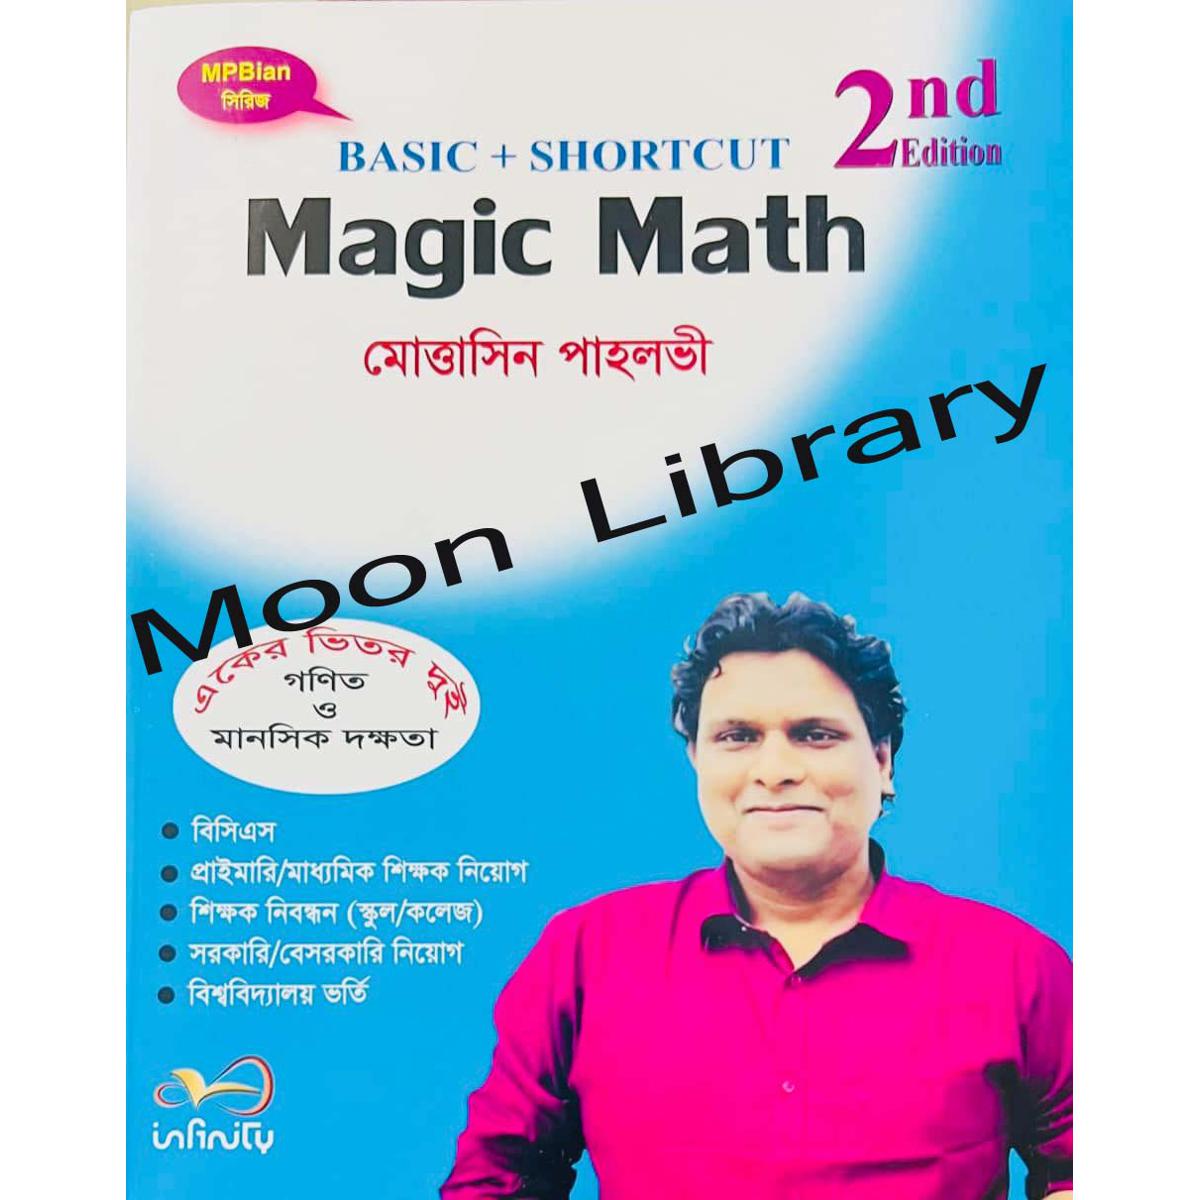 Magic Math by Mottasin Pahlovi 2n Edition